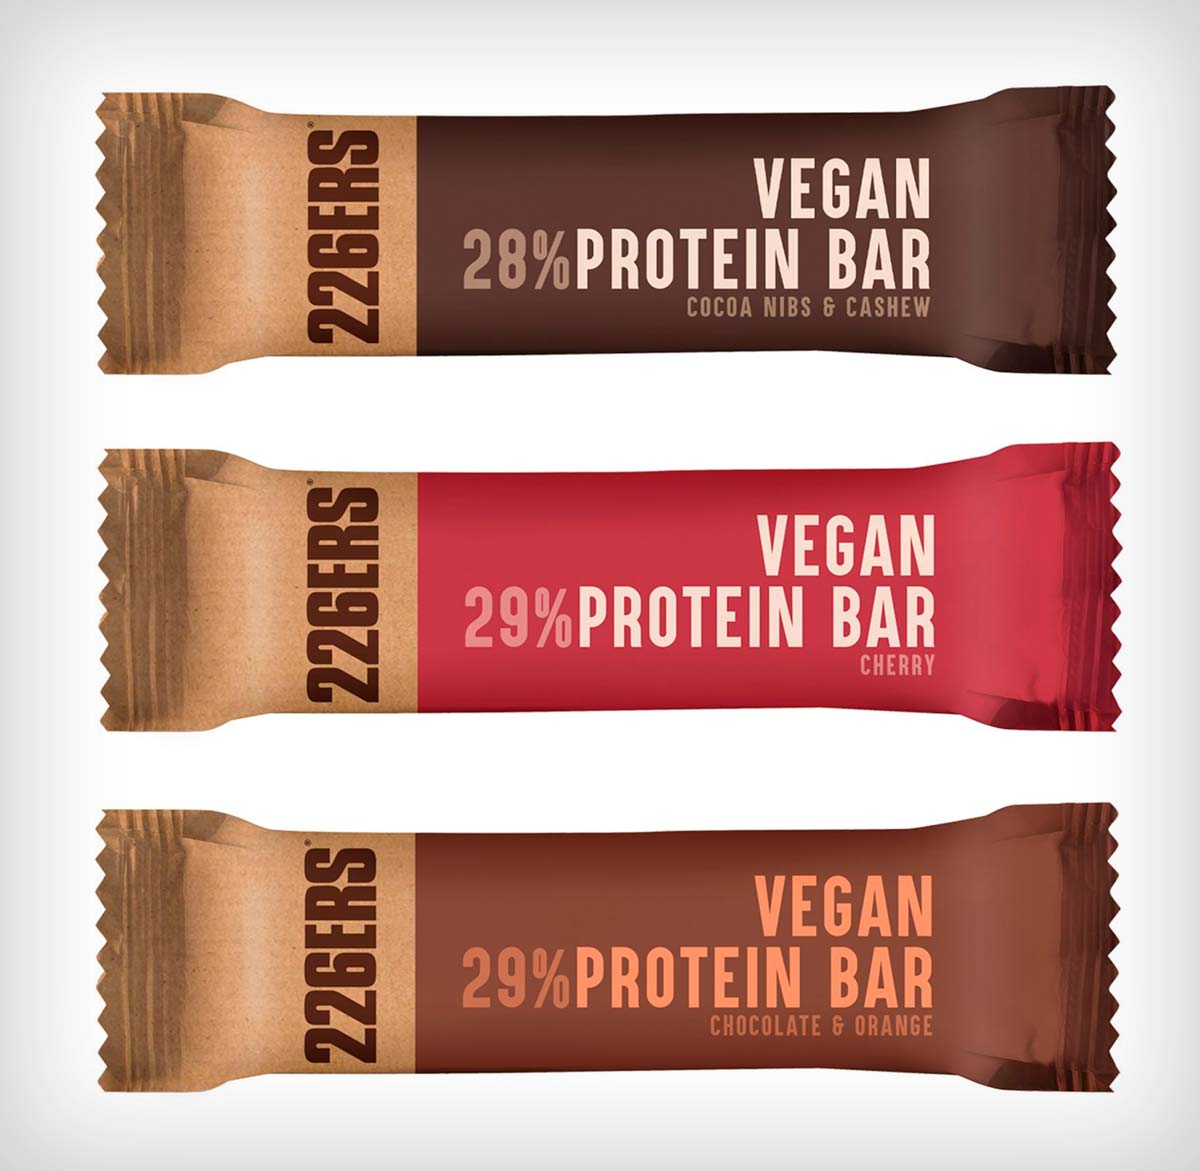 En TodoMountainBike: 226ERS Vegan Protein, barritas de proteínas aptas para ciclistas veganos